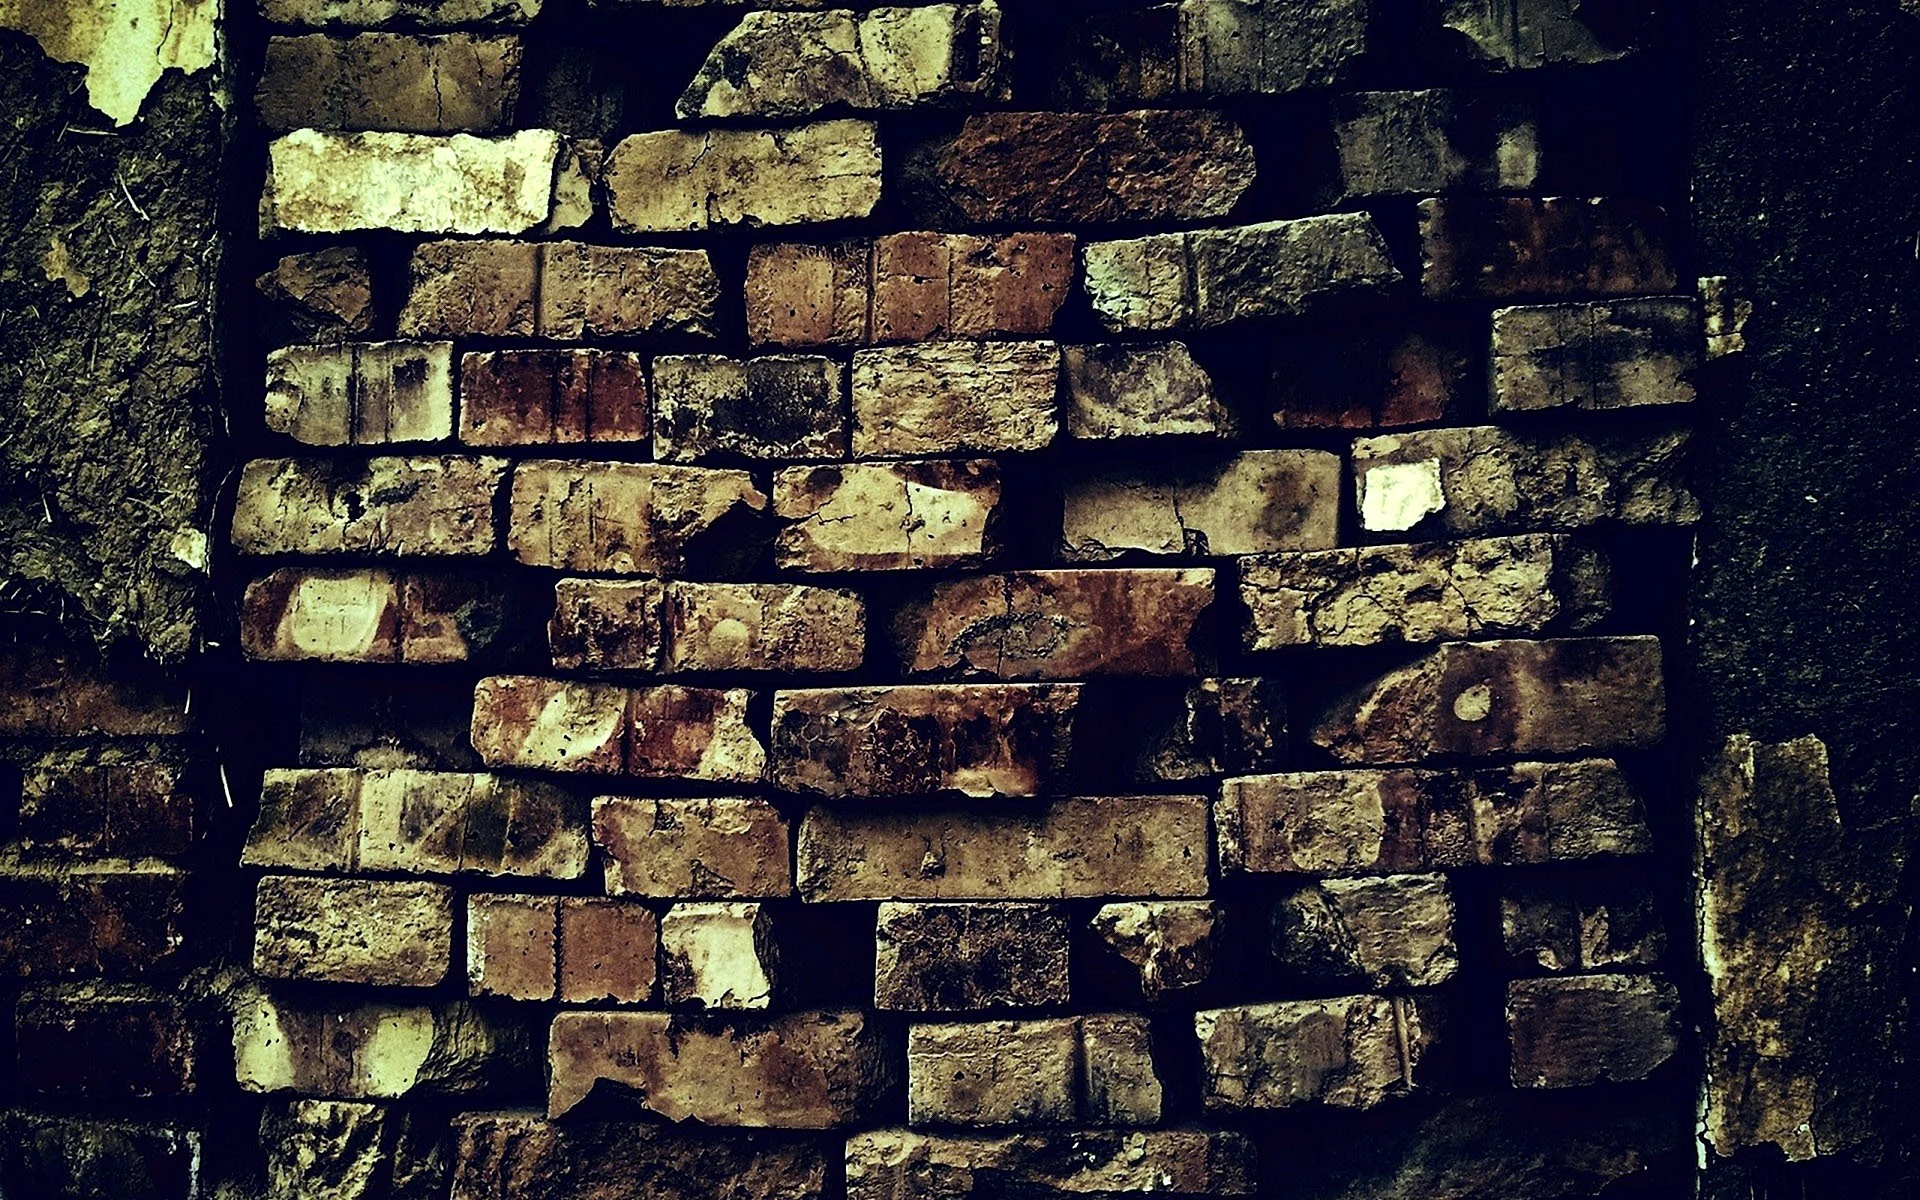 Brick Wall texture Wallpaper